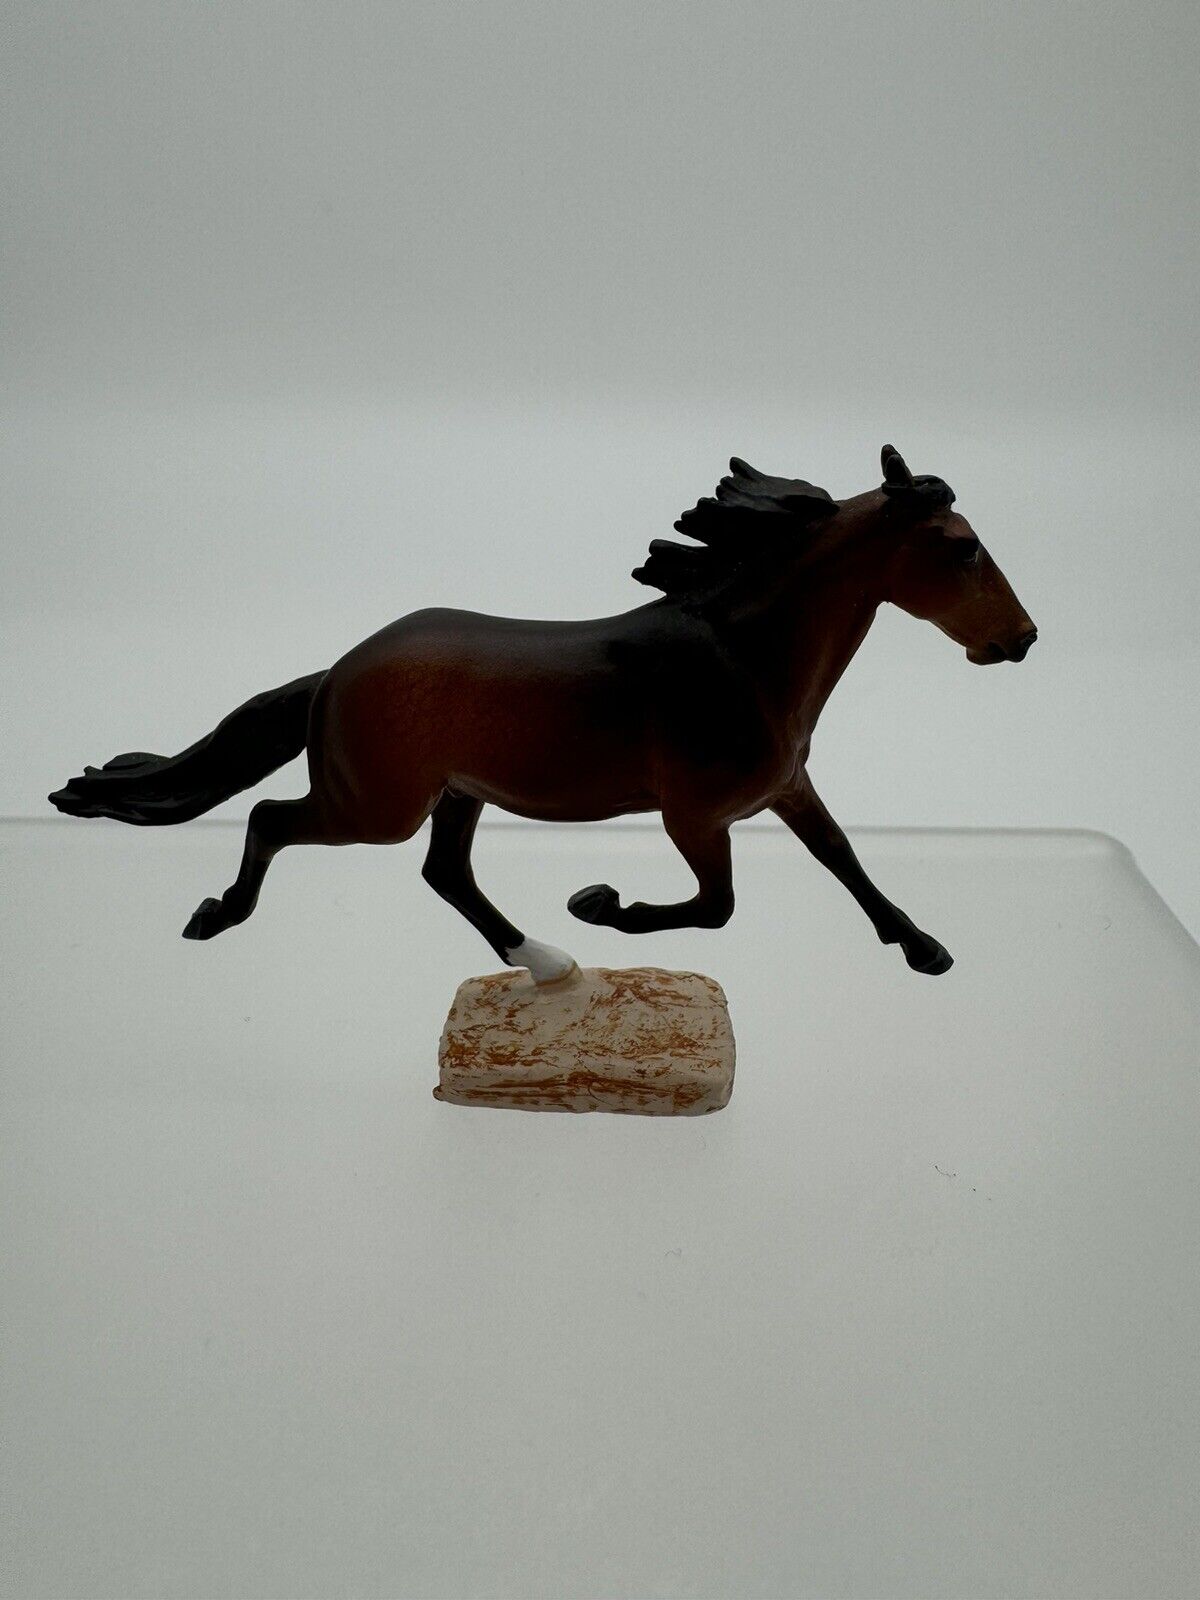 Standardbred Micro Mini Dapple Bay Horse